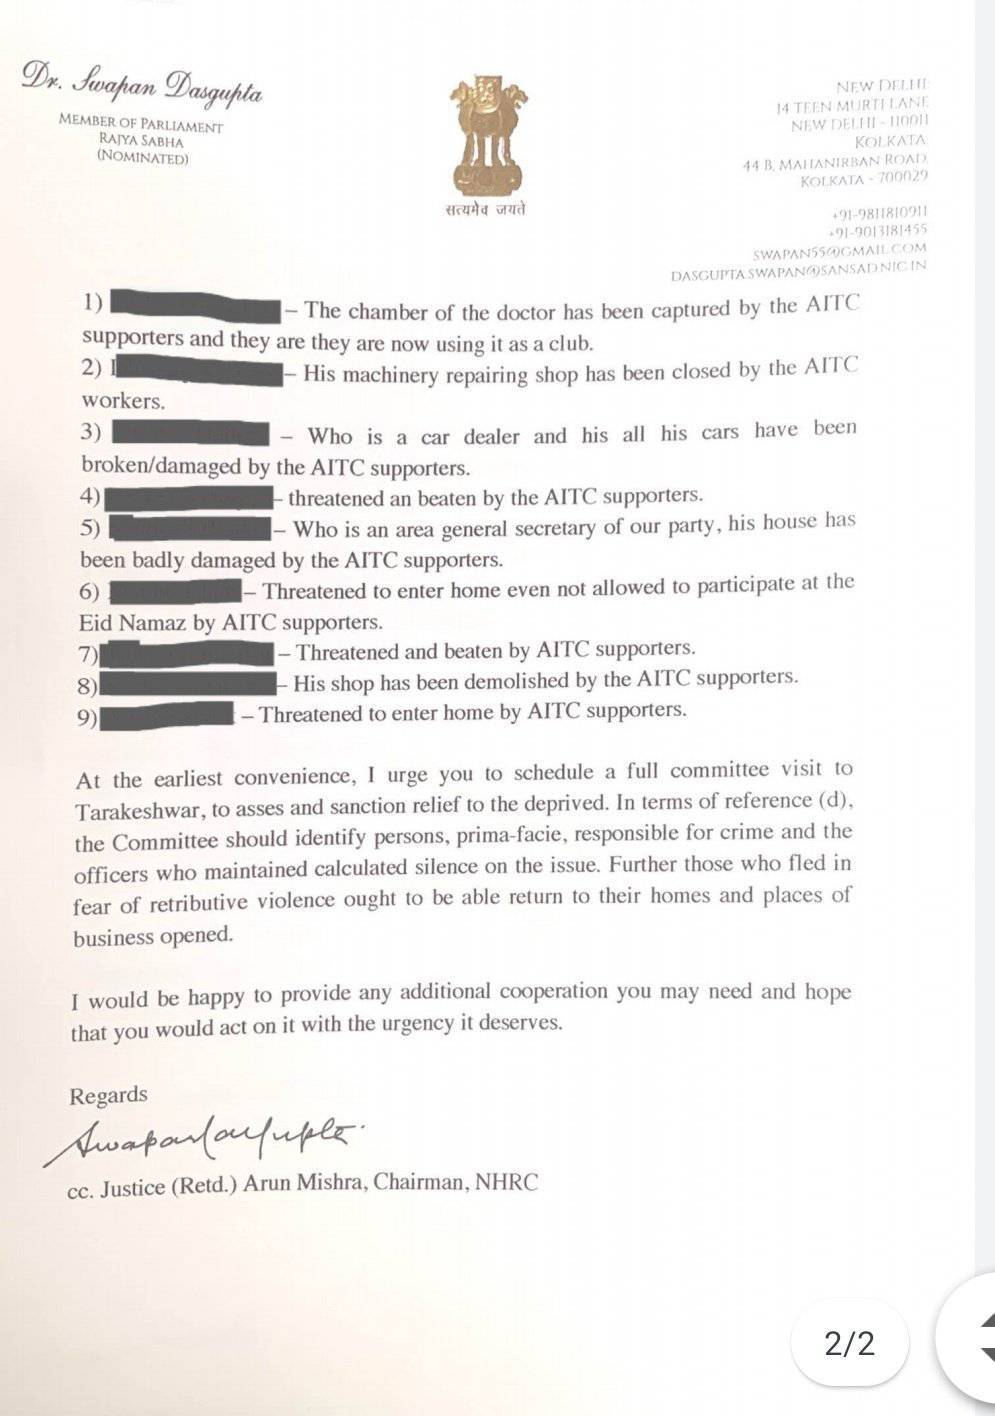 Screengrab of the letter by Swapan Dasgupta image via Anindya